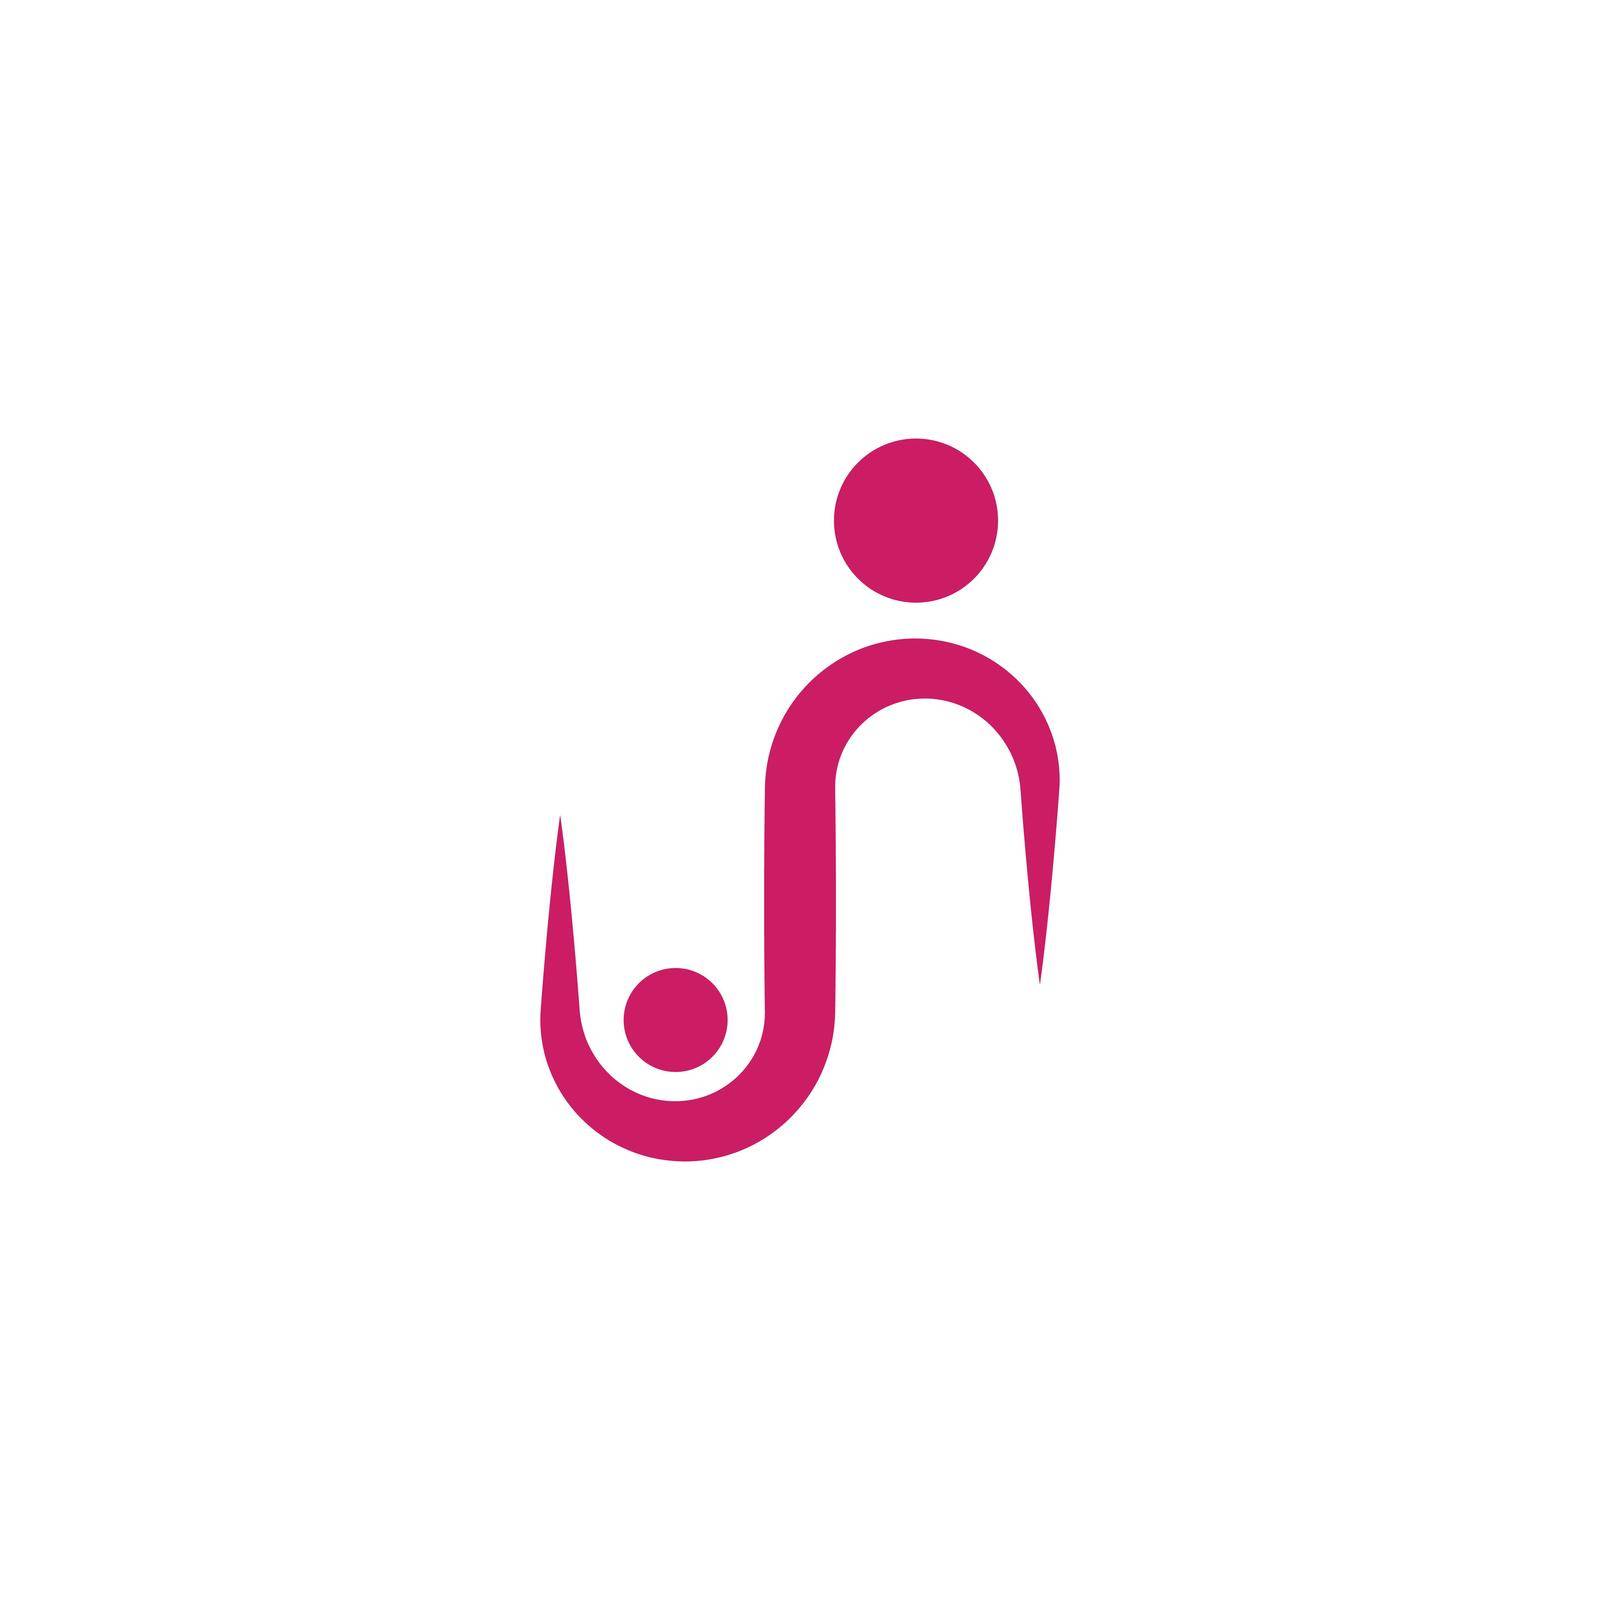 People , community care illustration Logo template vector